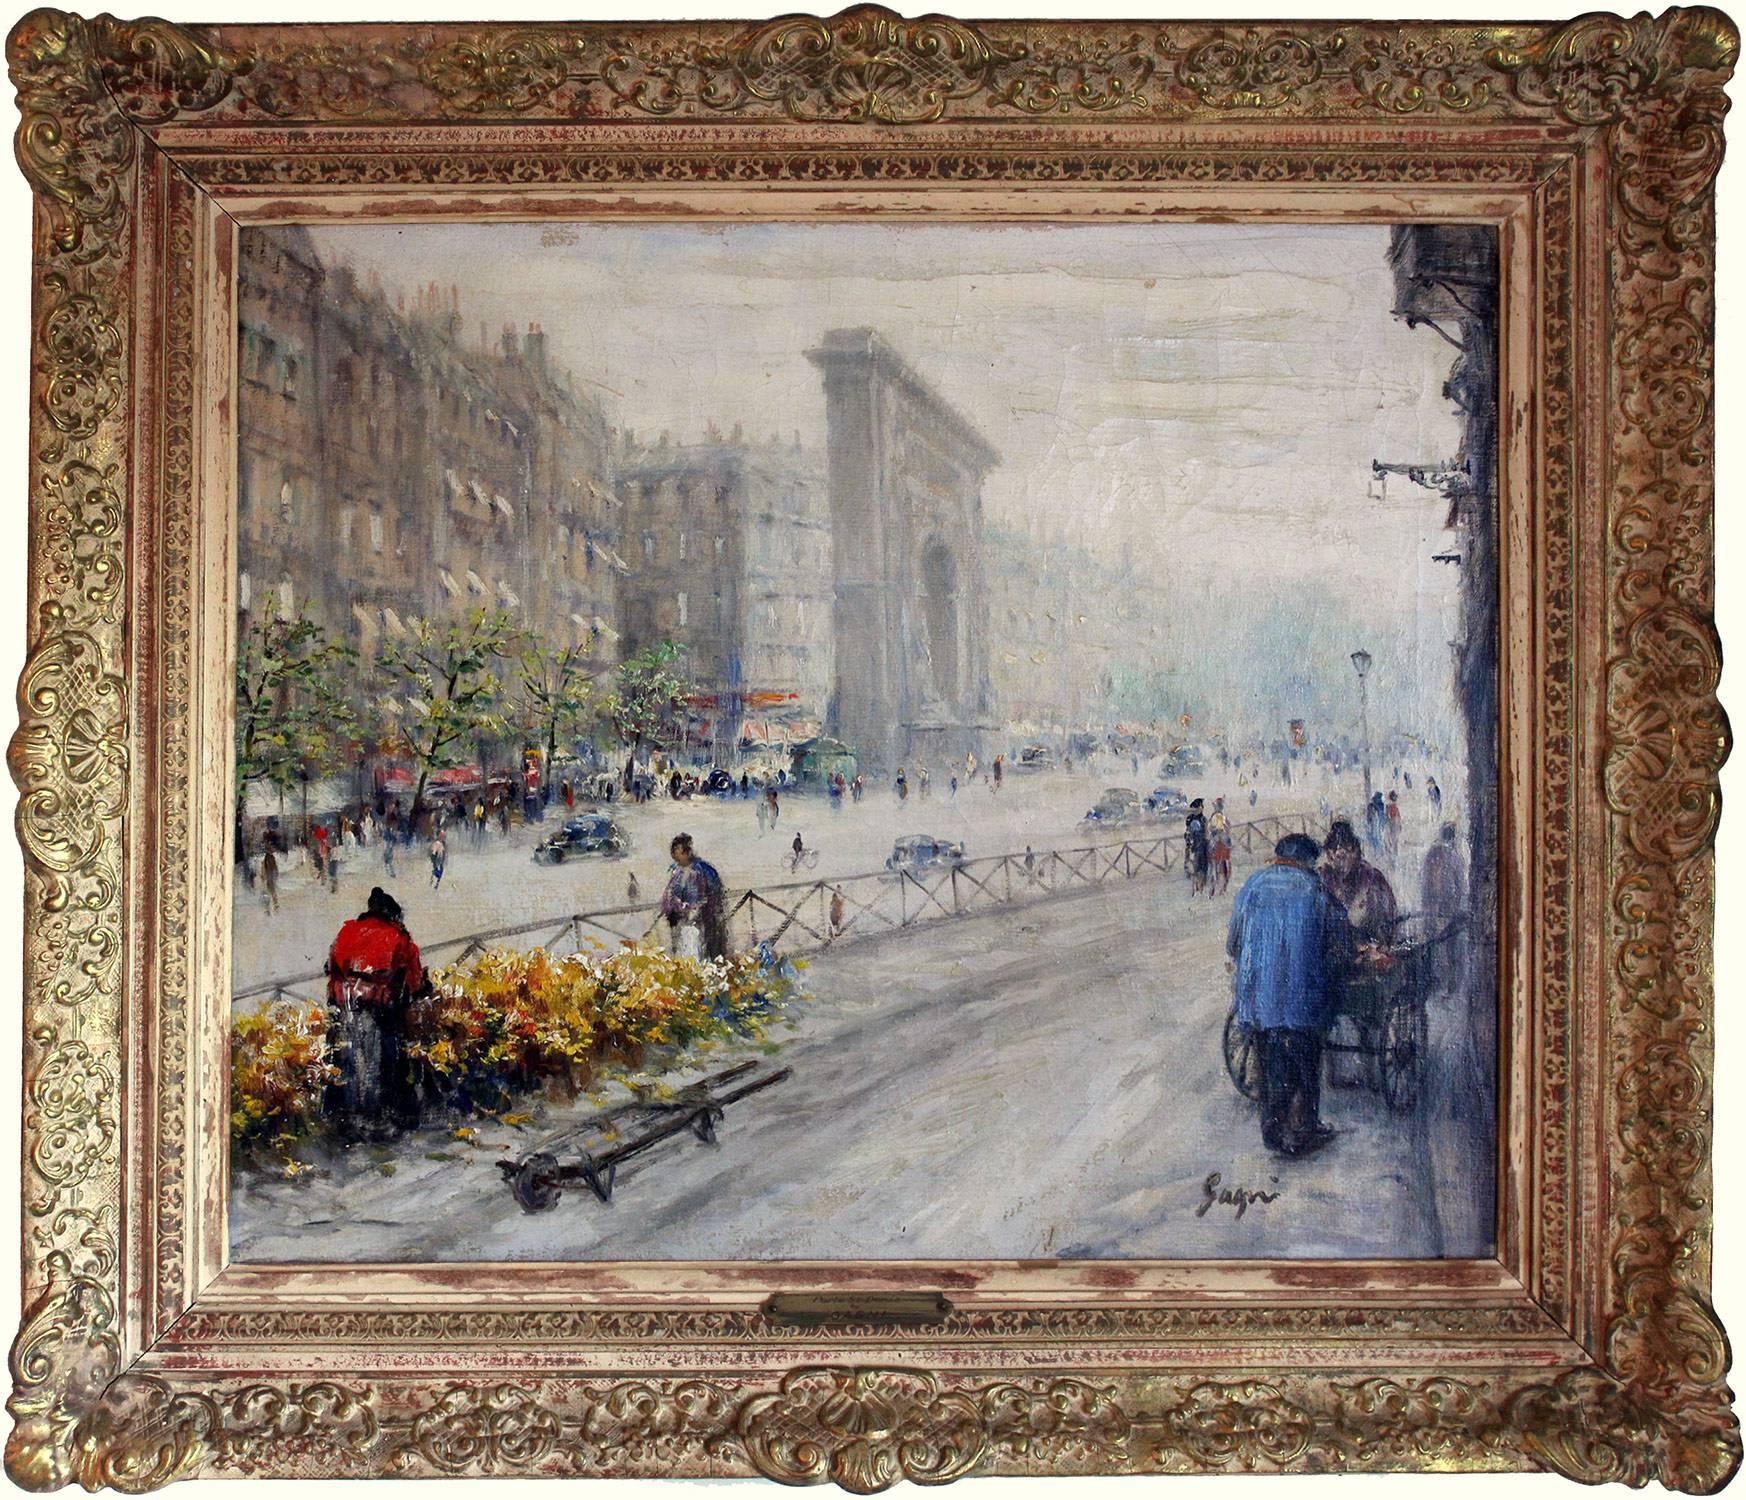 Paul Gagni Landscape Painting - "Porte St. Denis" 20th Century Parisian City Scape French Oil on Canvas Painting